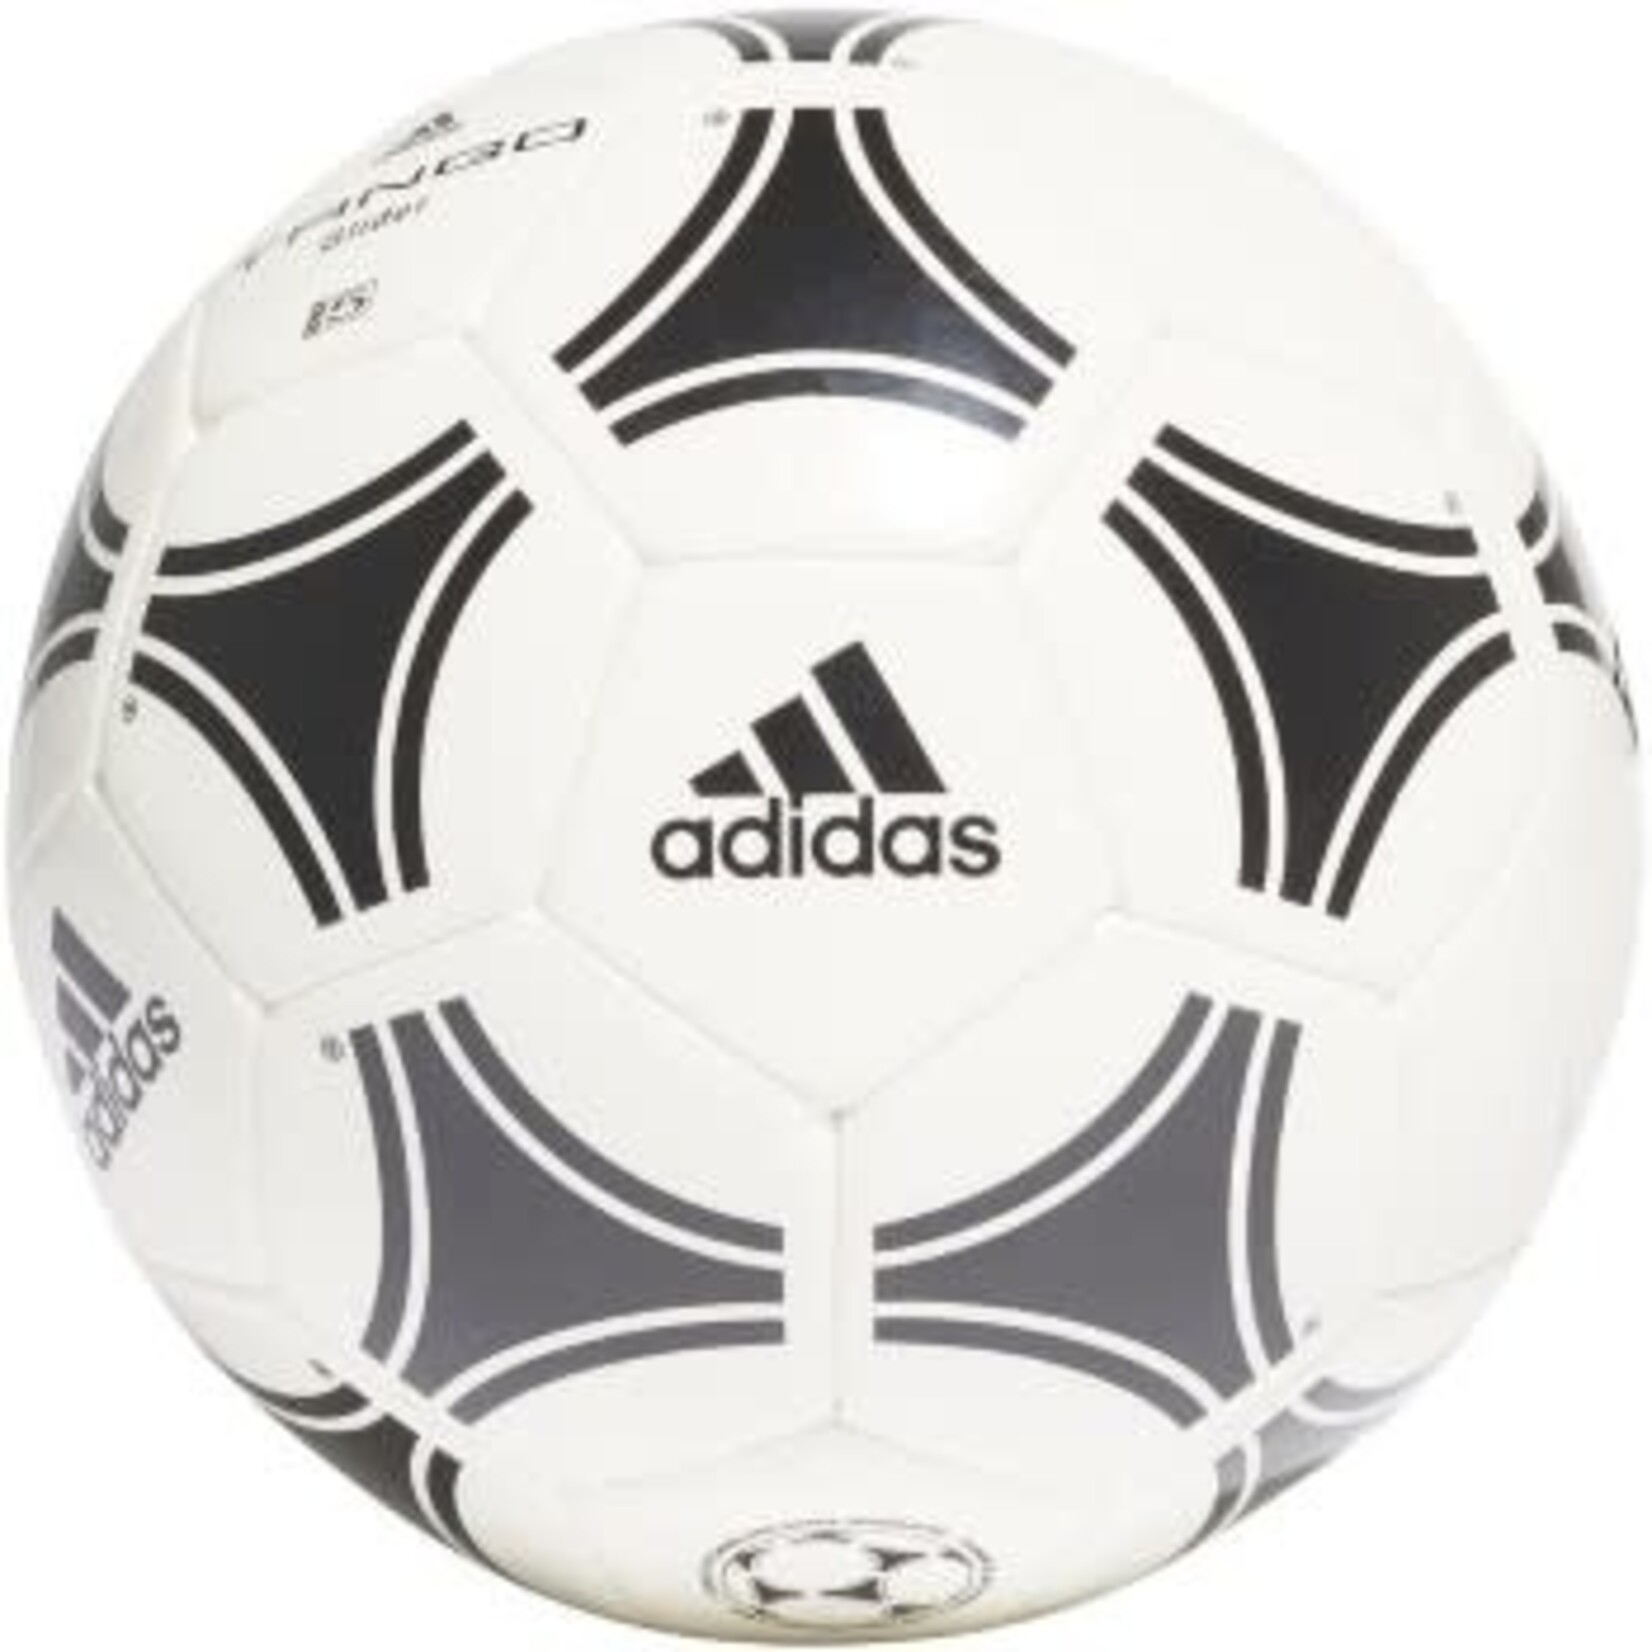 Adidas Adidas Soccer Ball, Tango Glider